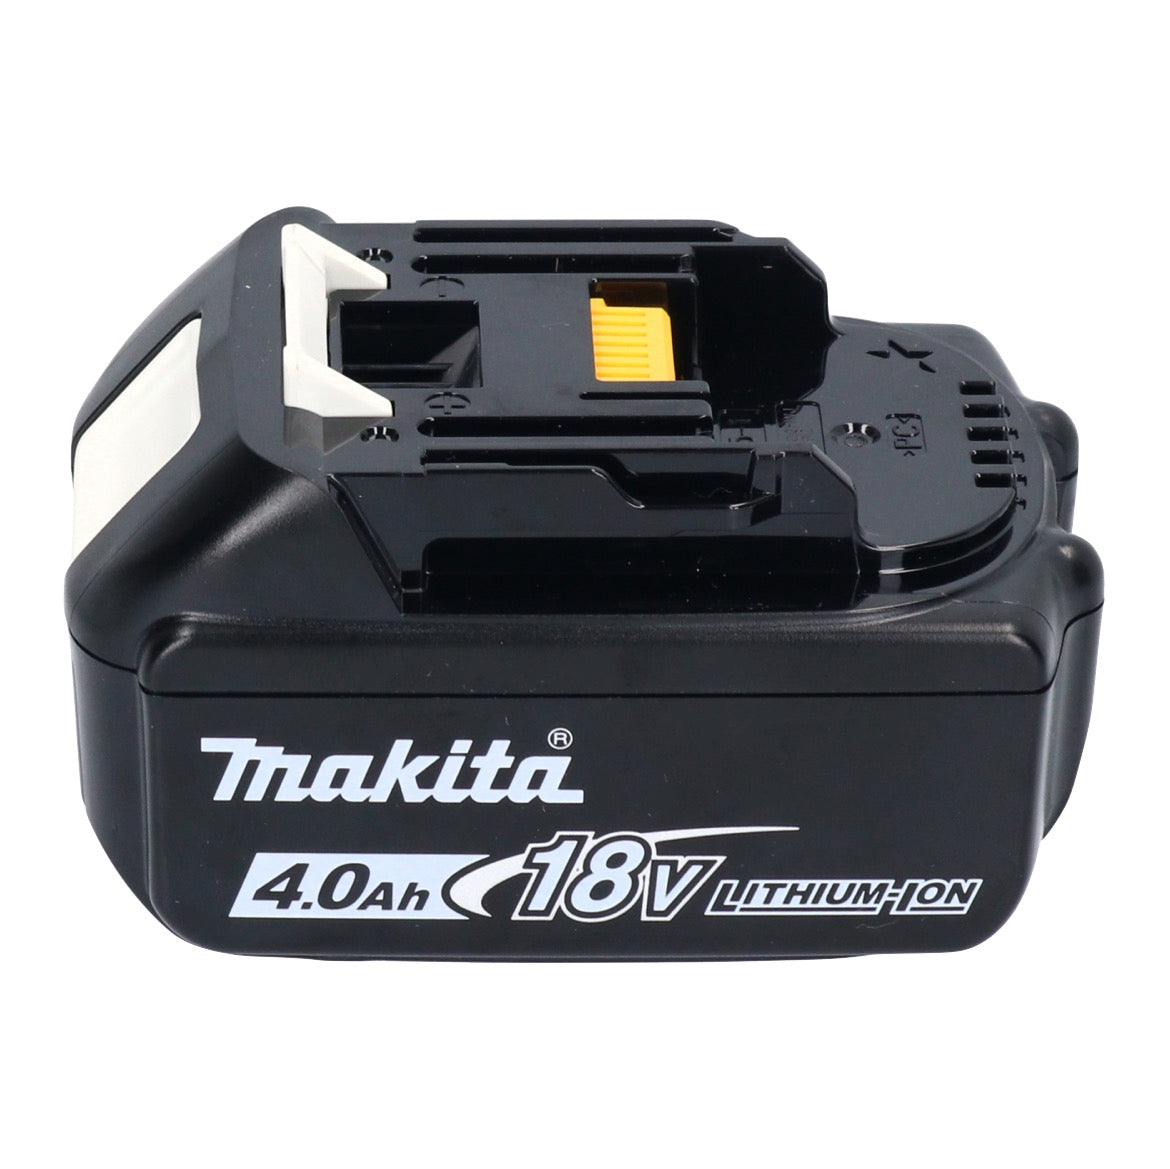 Makita DTD 157 M1J Akku Schlagschrauber 18 V 140 Nm 1/4" Brushless + 1x Akku 4,0 Ah + Makpac - ohne Ladegerät